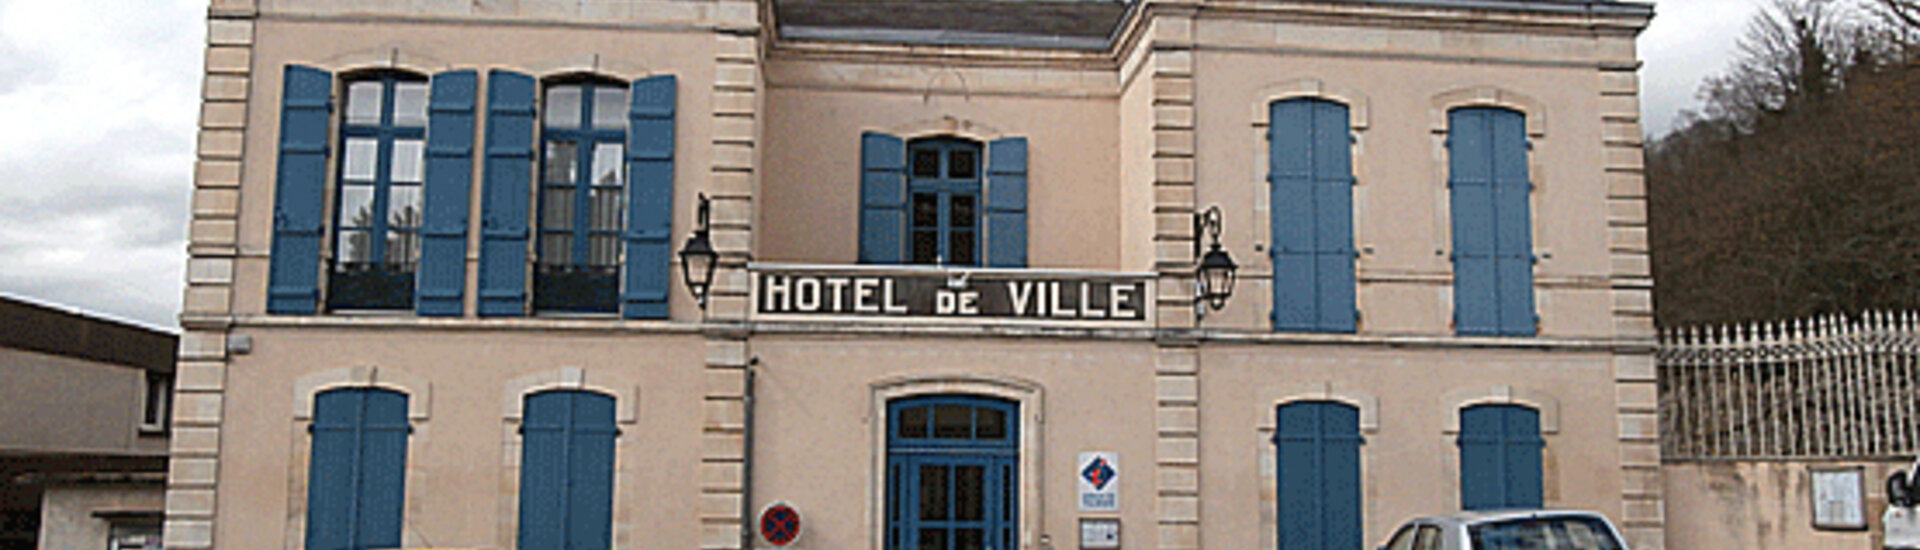 Commune Mairie Hérisson Village Vallée Aumance Nord Allier